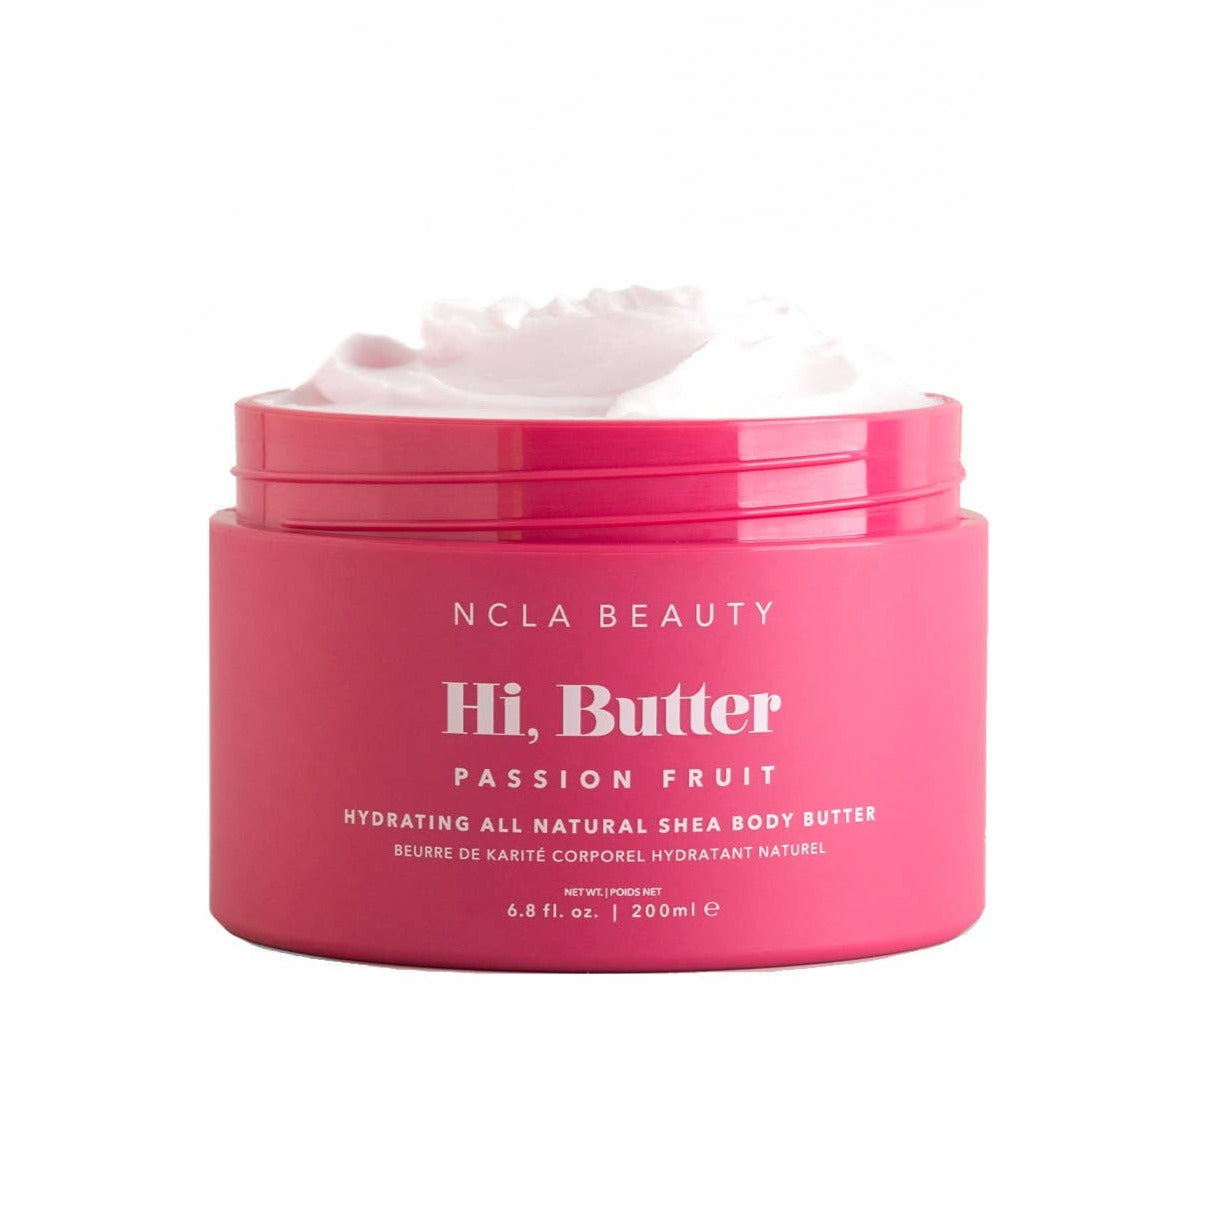 NCLA Beauty Hi, Butter All Natural Passion Fruit Shea Body Butter